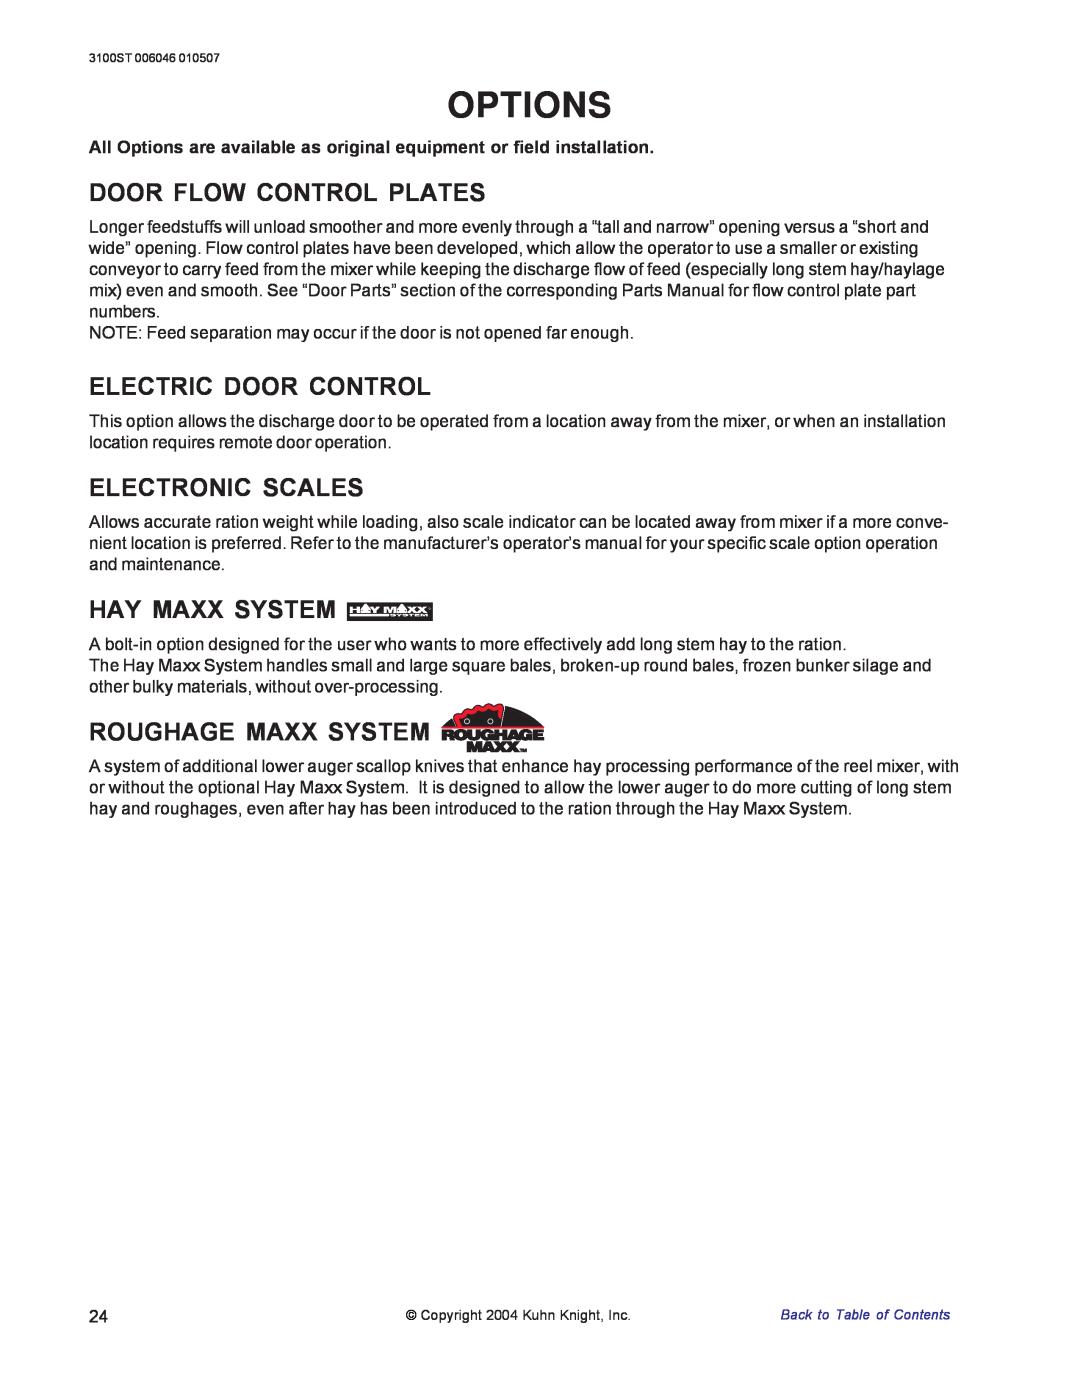 Kuhn Rikon 3100 Options, Door Flow Control Plates, Electric Door Control, Electronic Scales, Hay Maxx System 